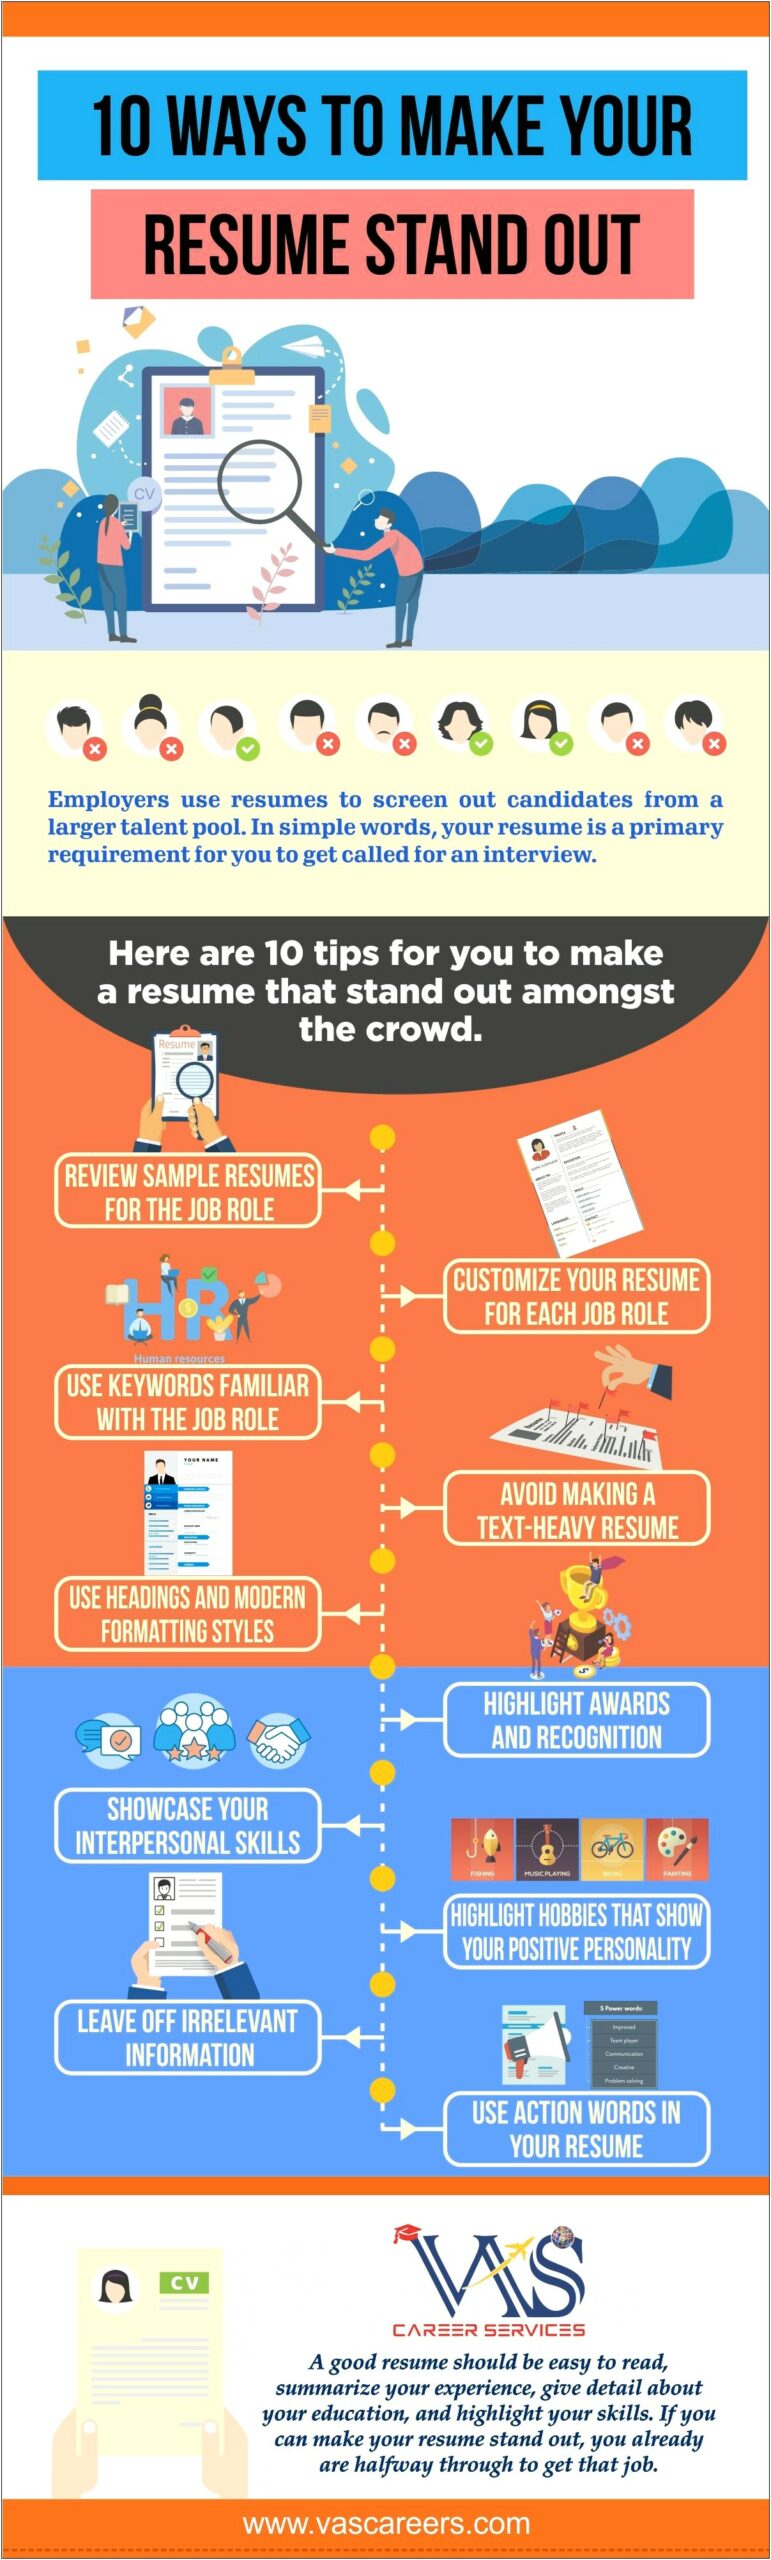 10 Tips To Make A Good Resume